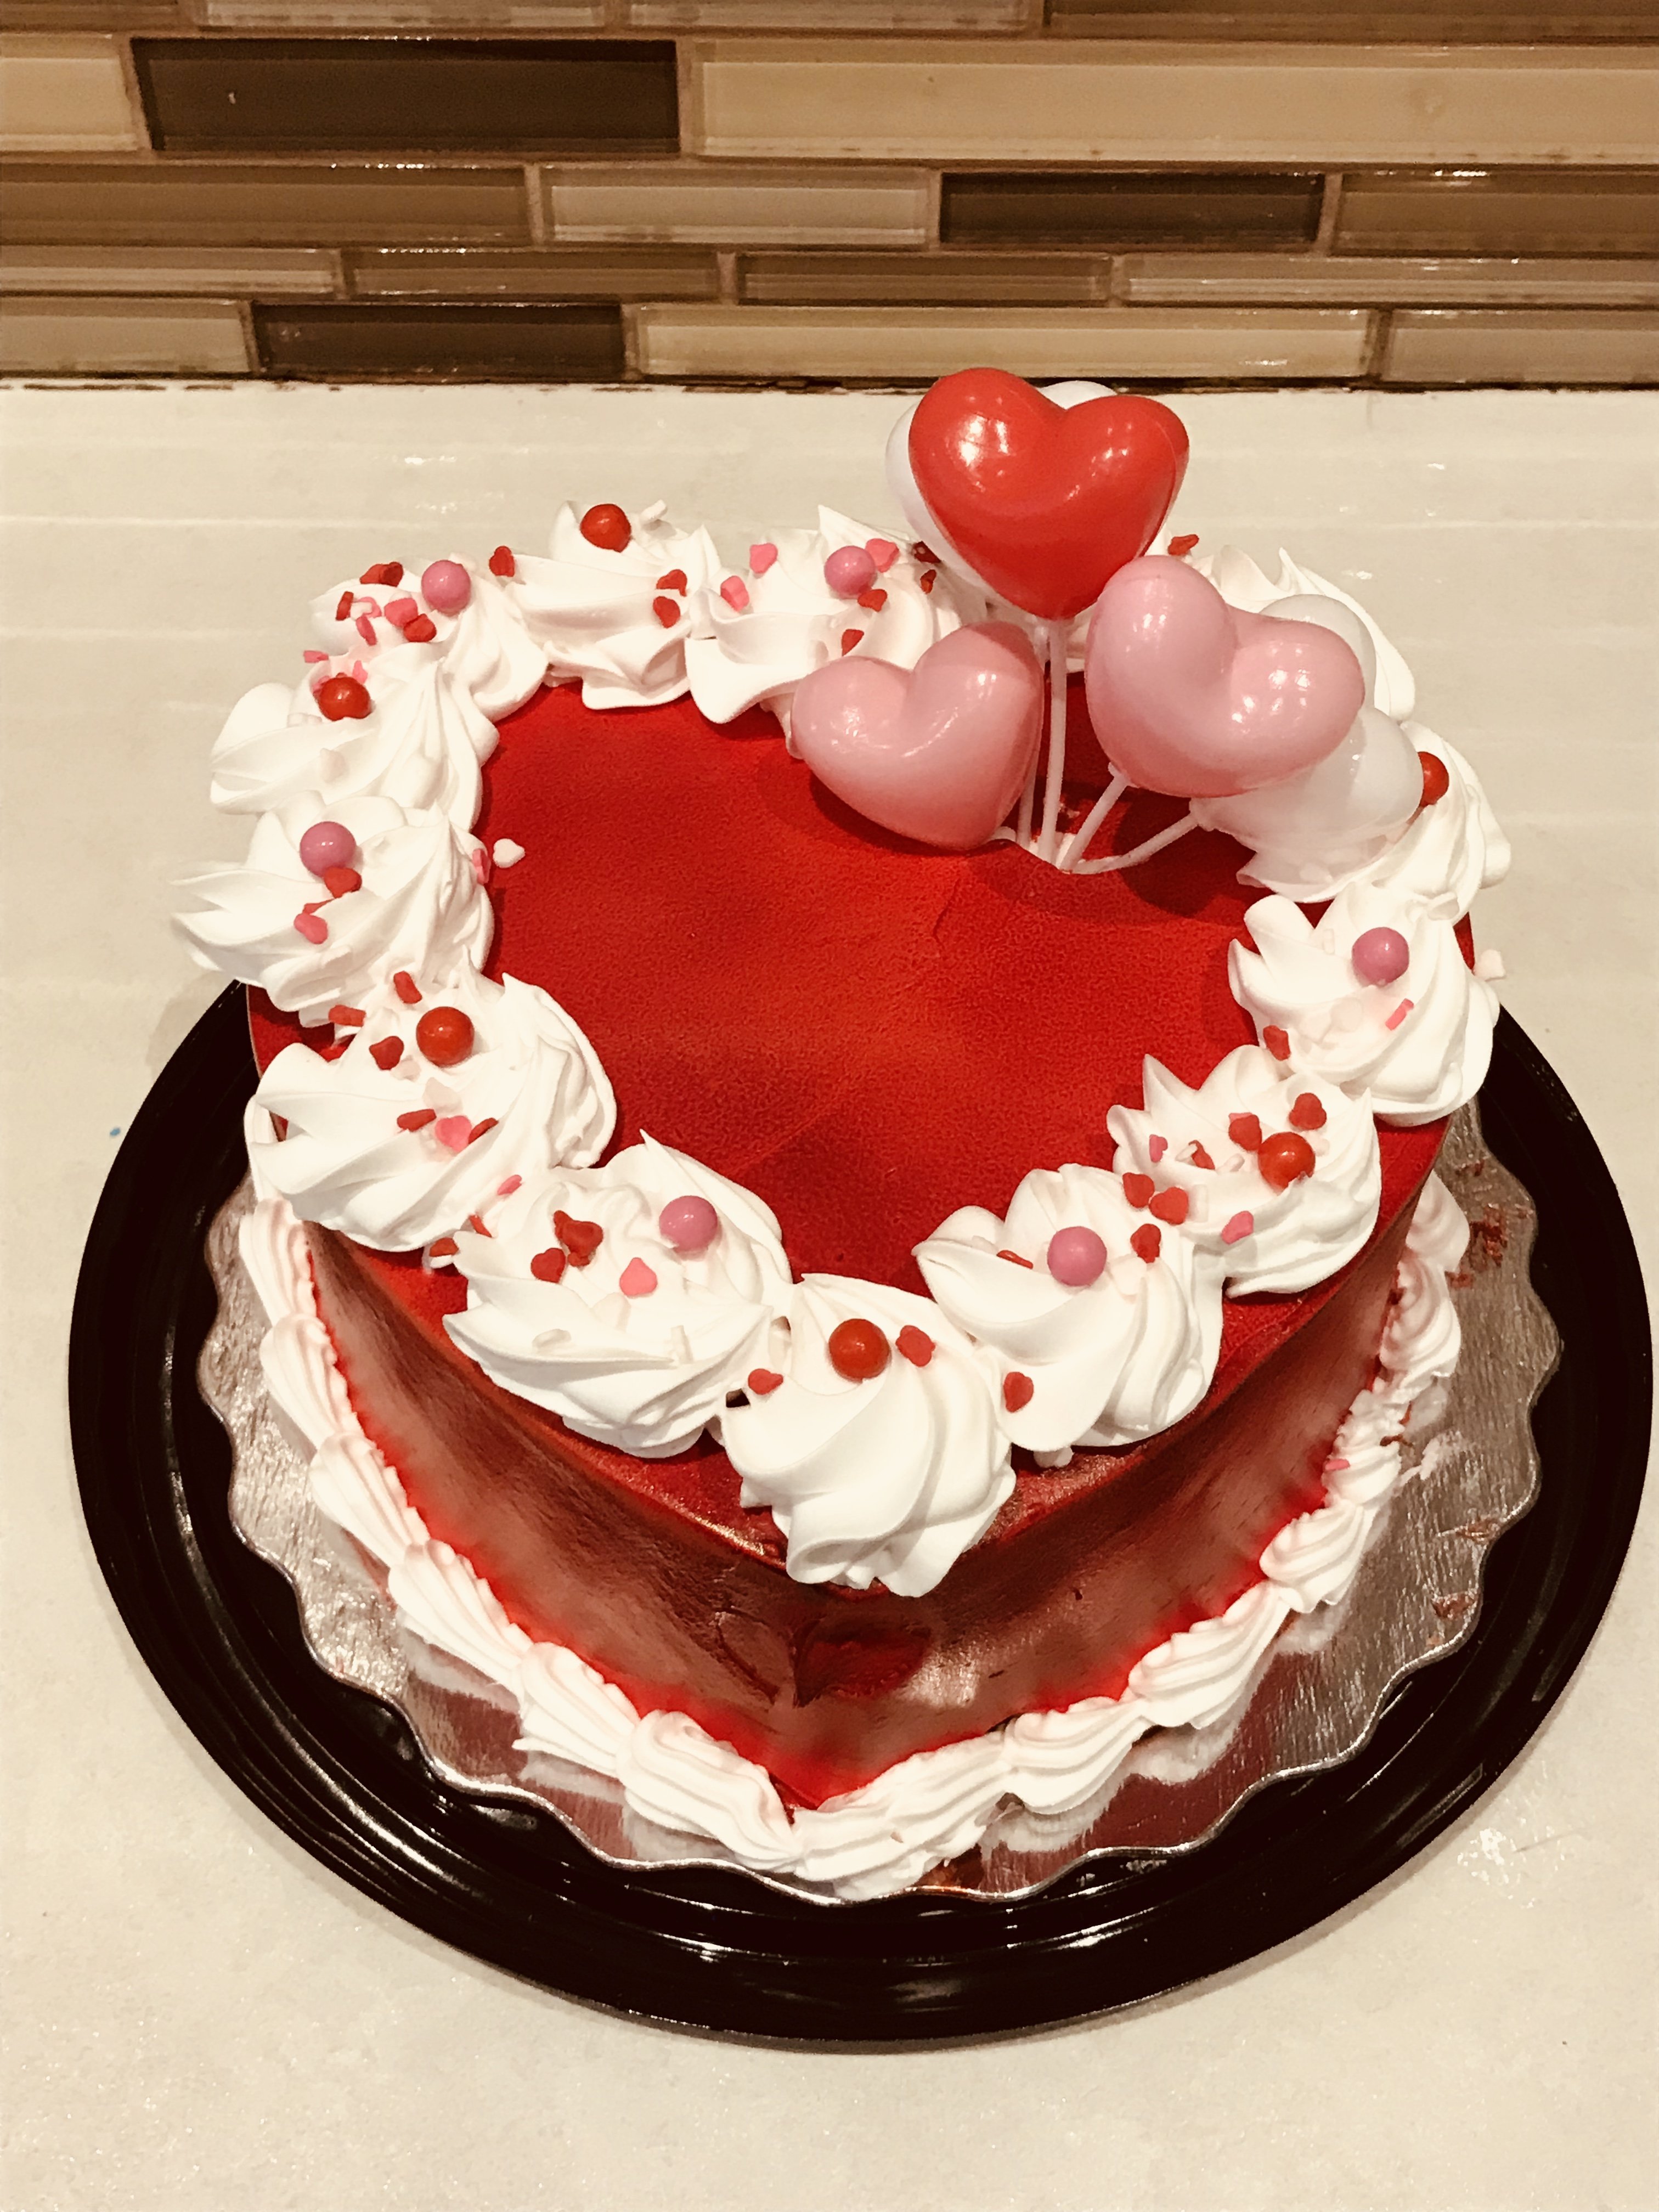 Heart-shaped Cake with Balloons To Toronto, Brampton, Scarborough Ontario Canada from Pakistan ...